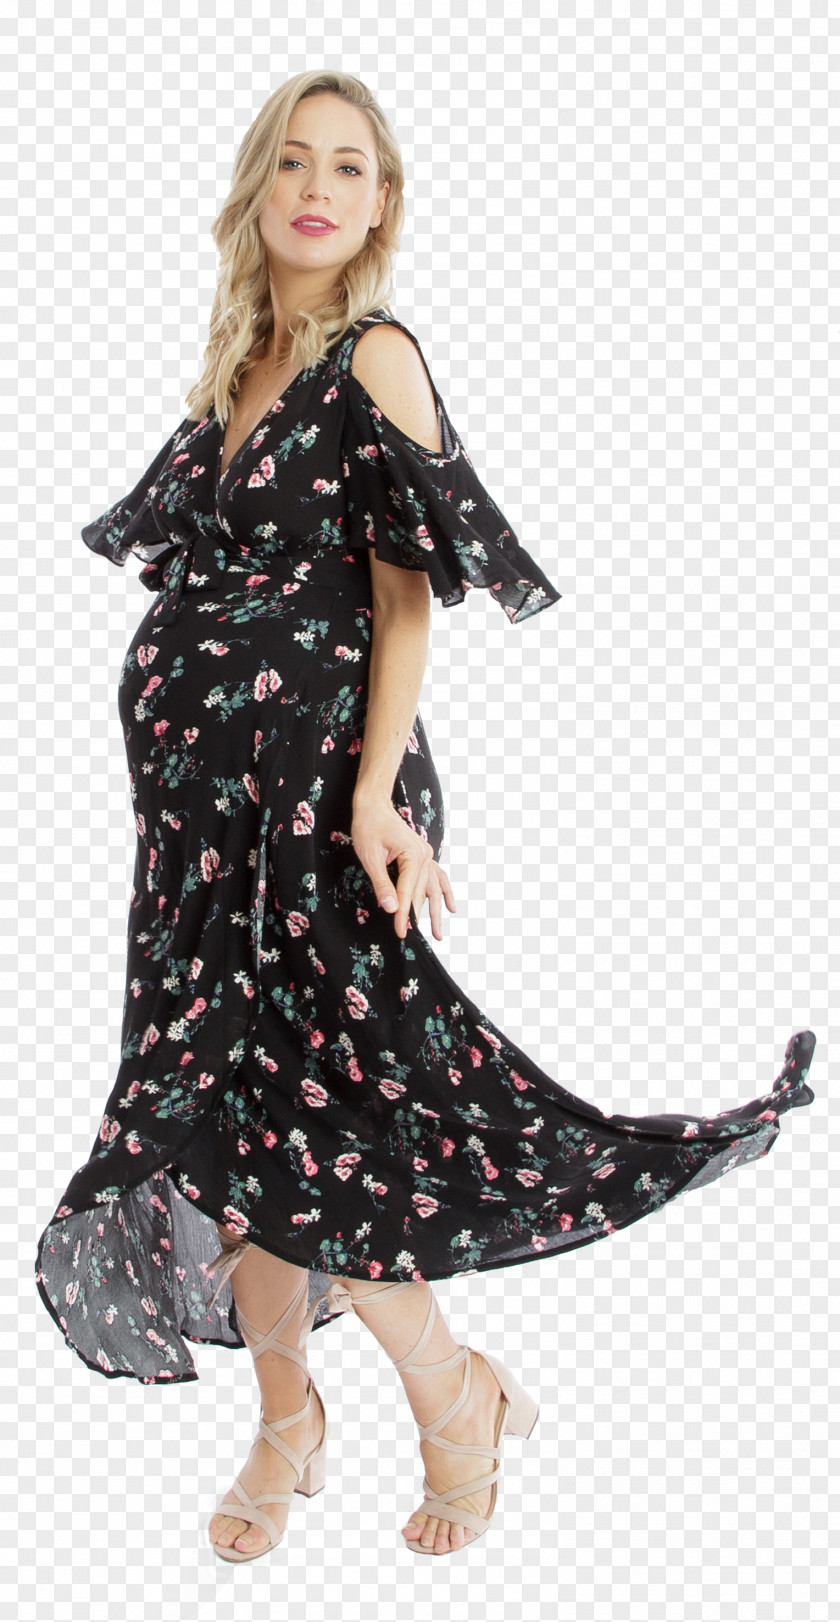 Breastfeed Clothing Cocktail Dress Shoulder PNG